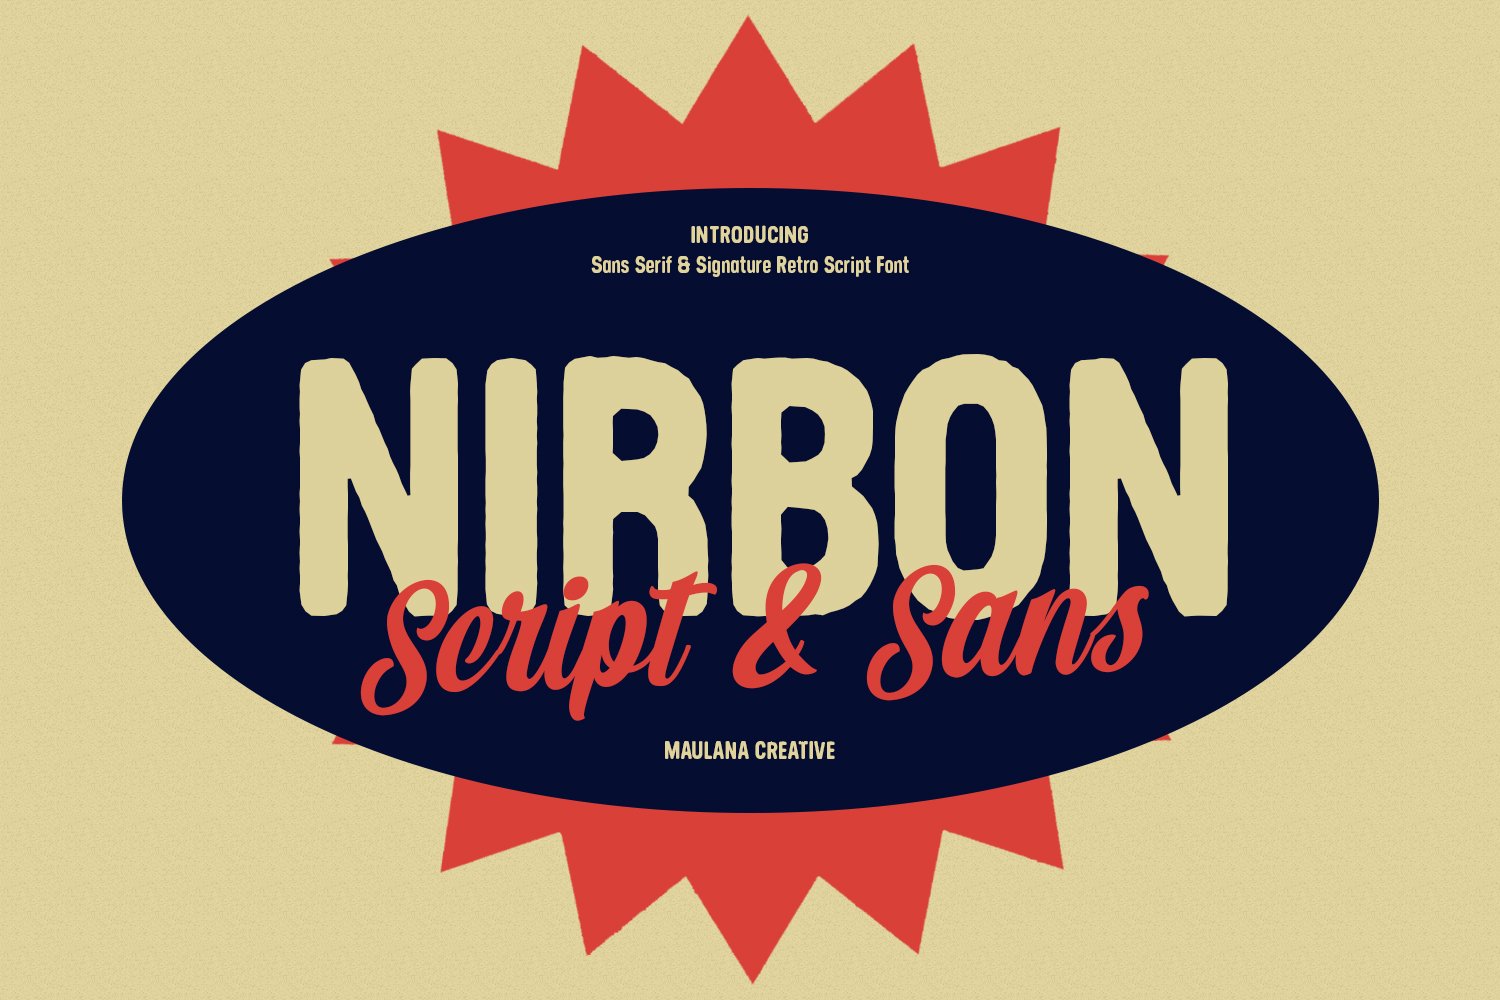 Nirbon Display Font cover image.